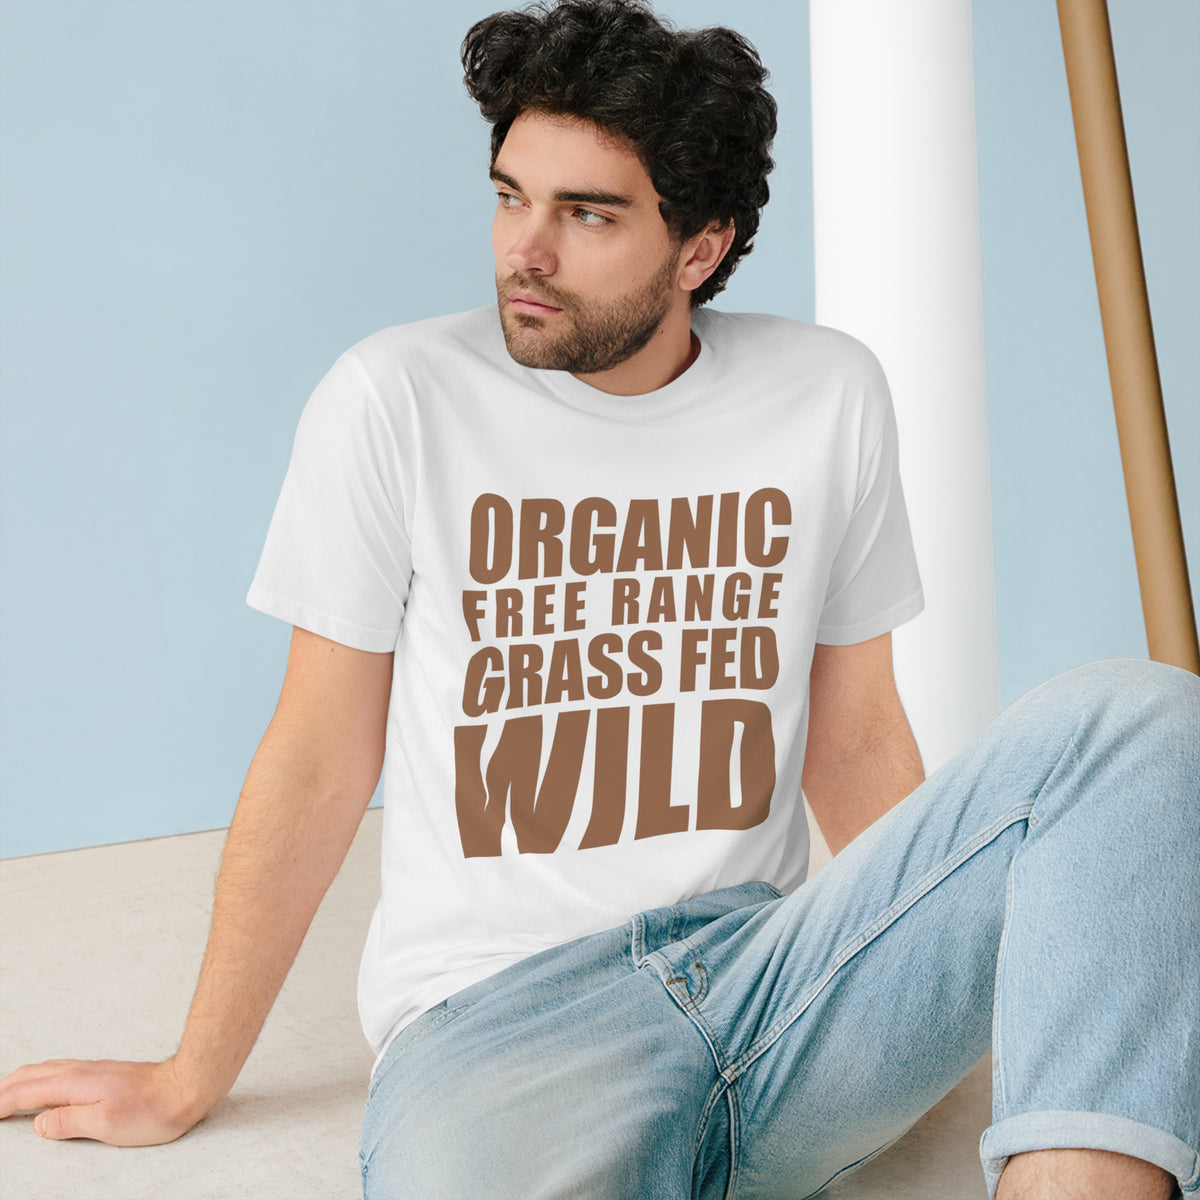 Organic, Free Range, Grass-fed & Wild (organic)